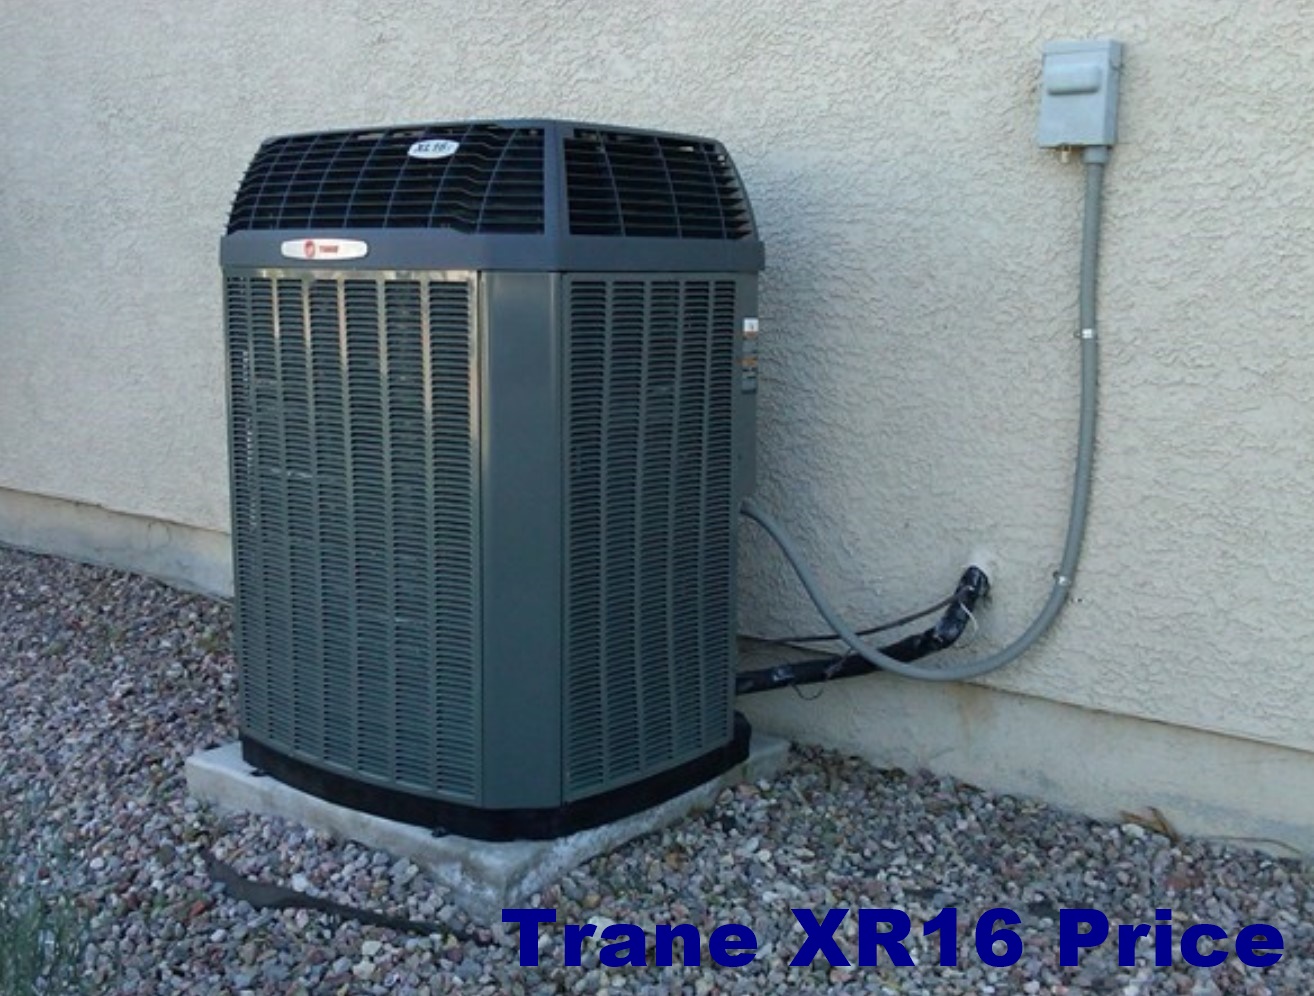 Are Trane heat pumps worth the money?